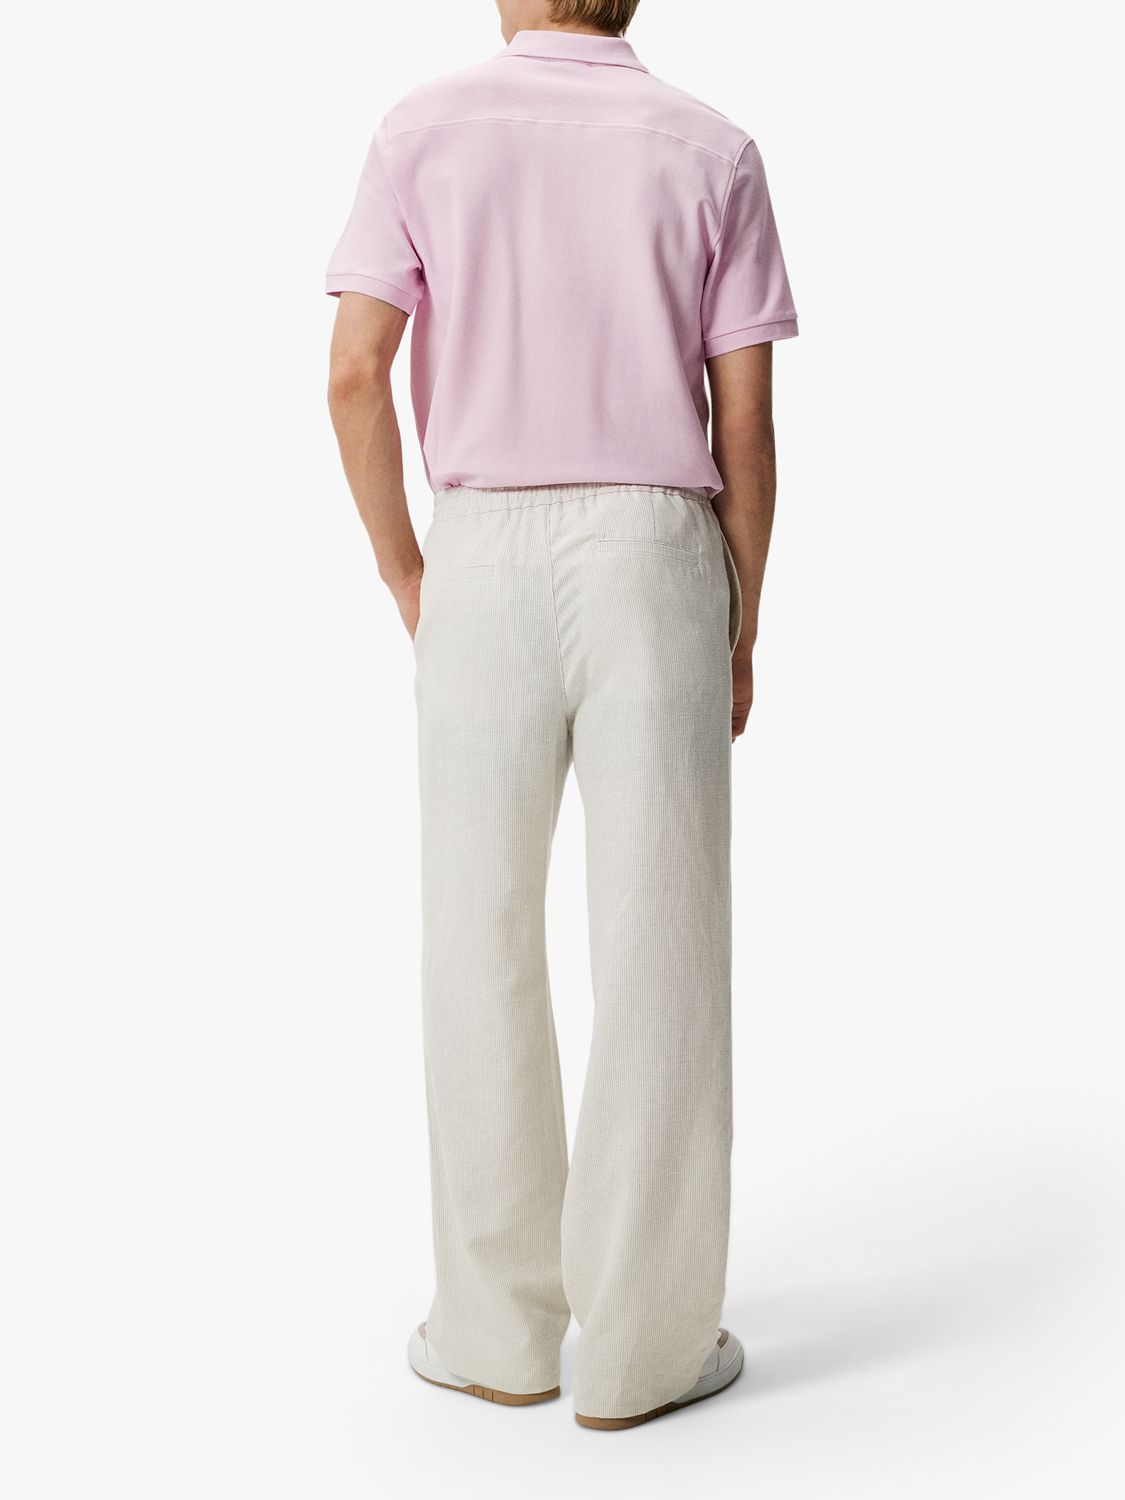 J.Lindeberg Troy Cotton Polo Shirt, Pink Lavender, S